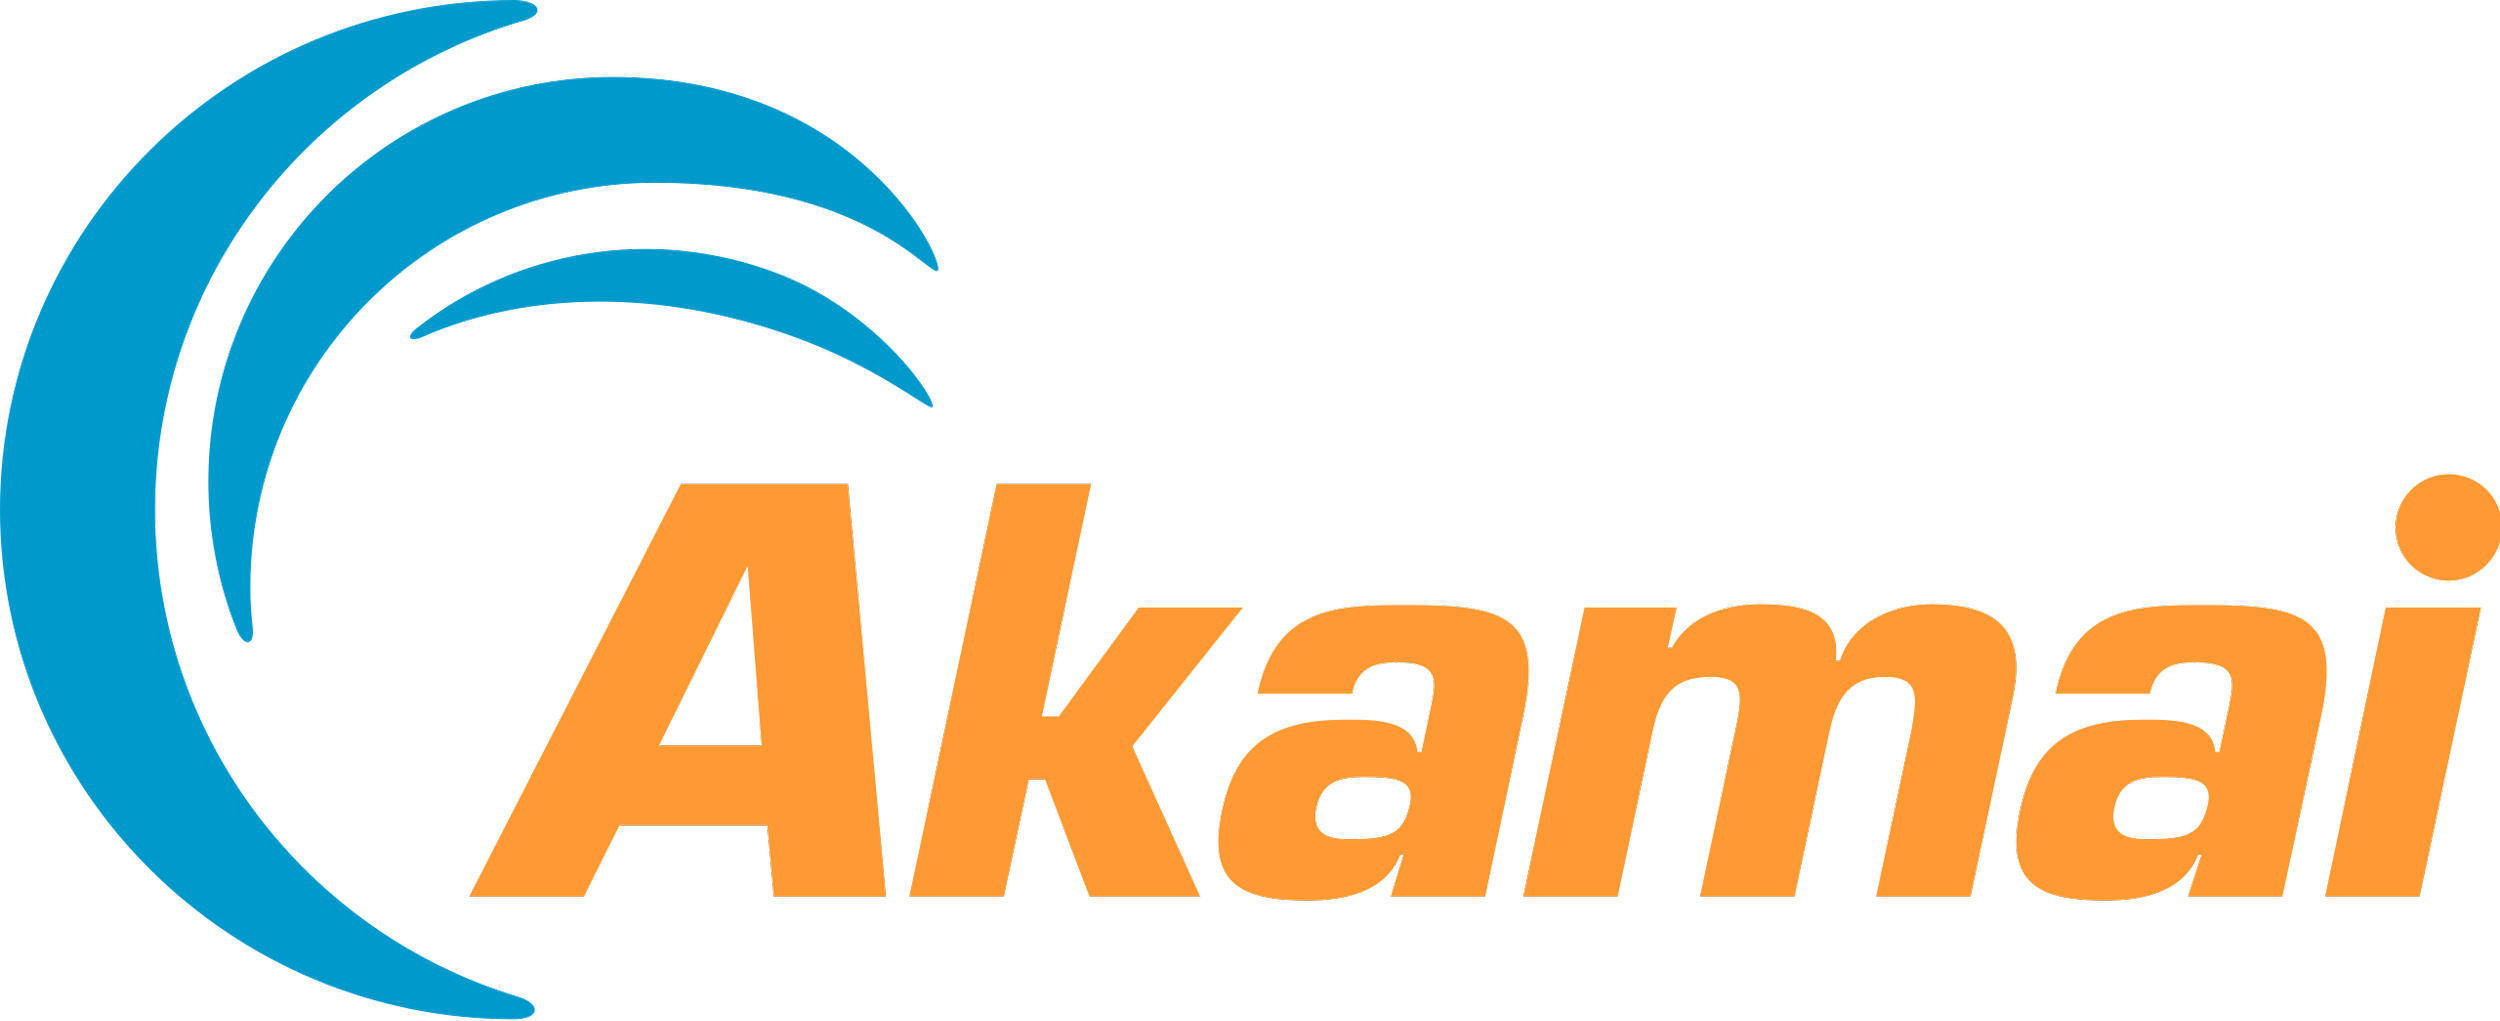 2560px-Akamai_logo.svg.png